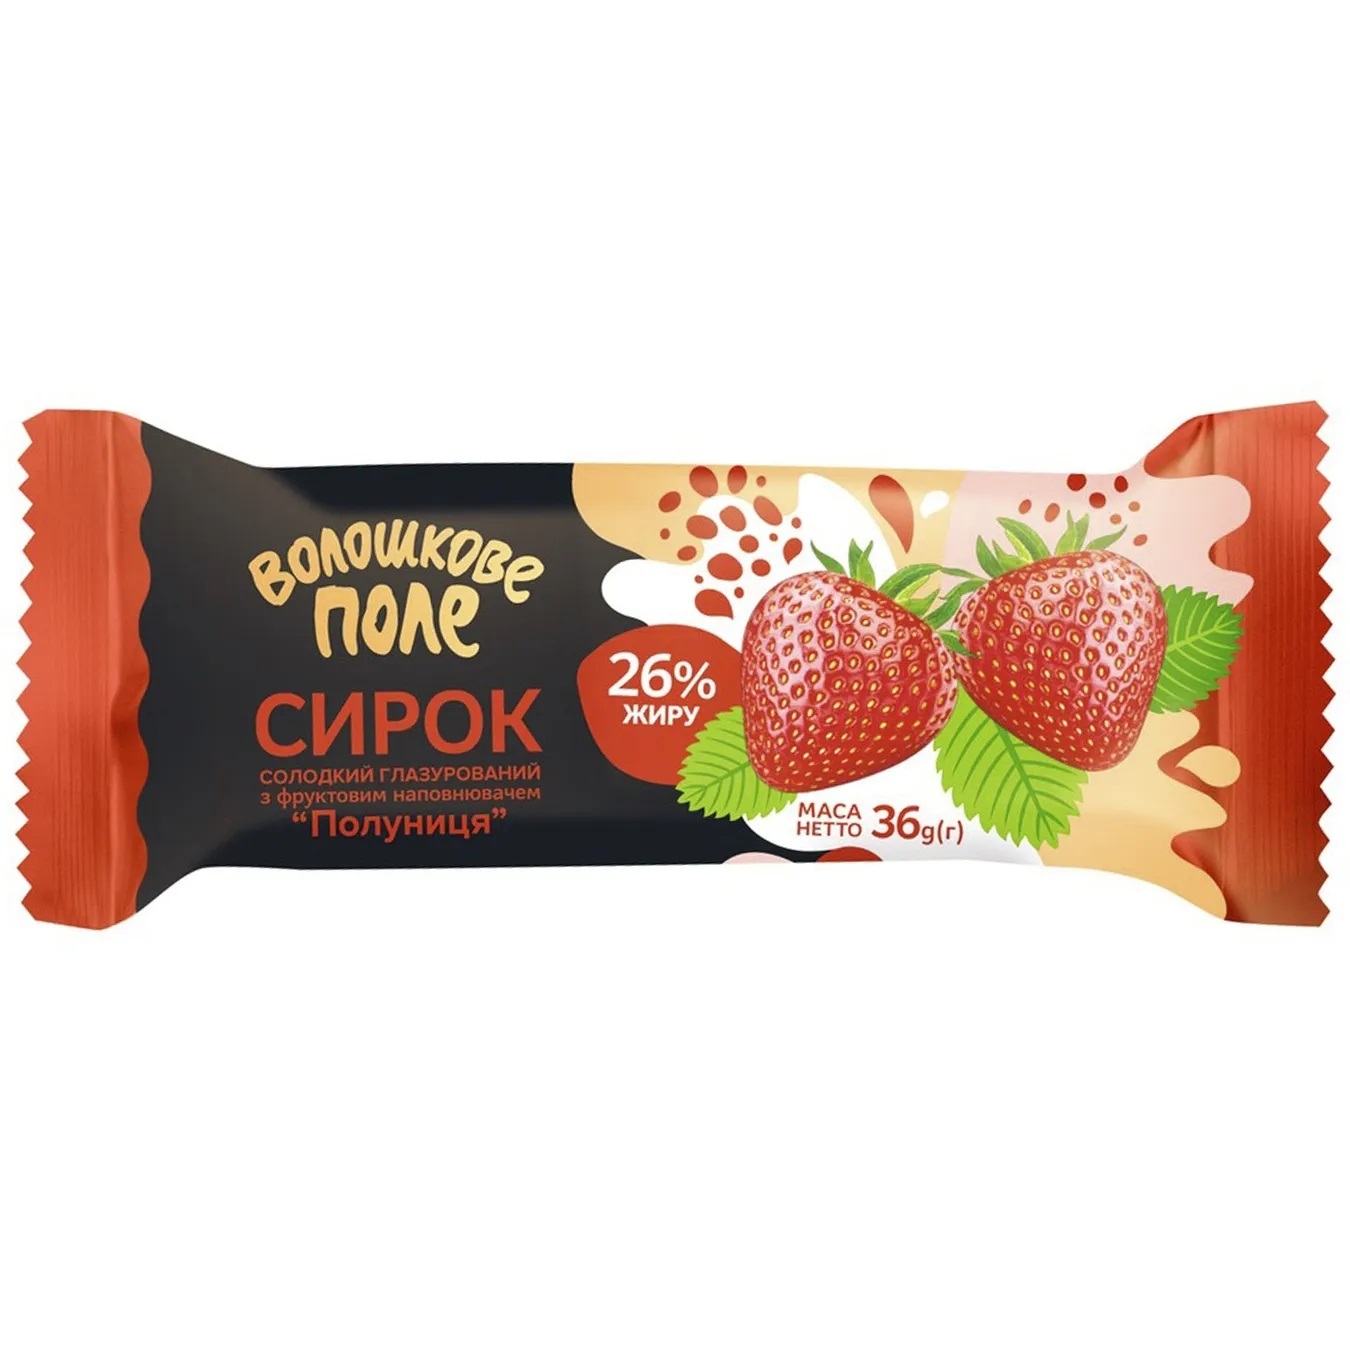 Voloshkove Pole Glazed Curd Snack with Strawberry Filling 26% 36g